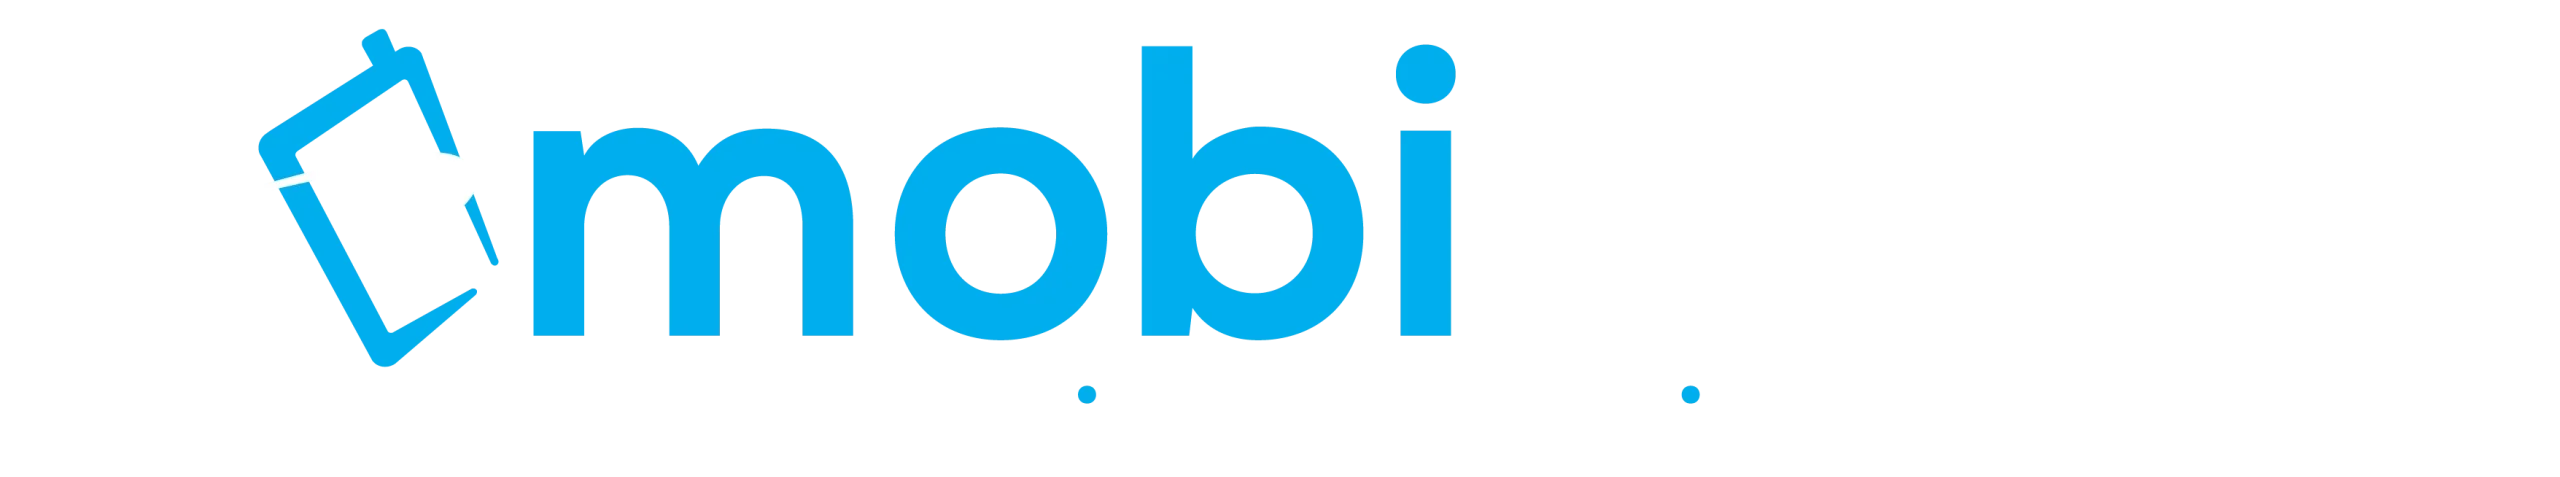 Mobi shop logo-02